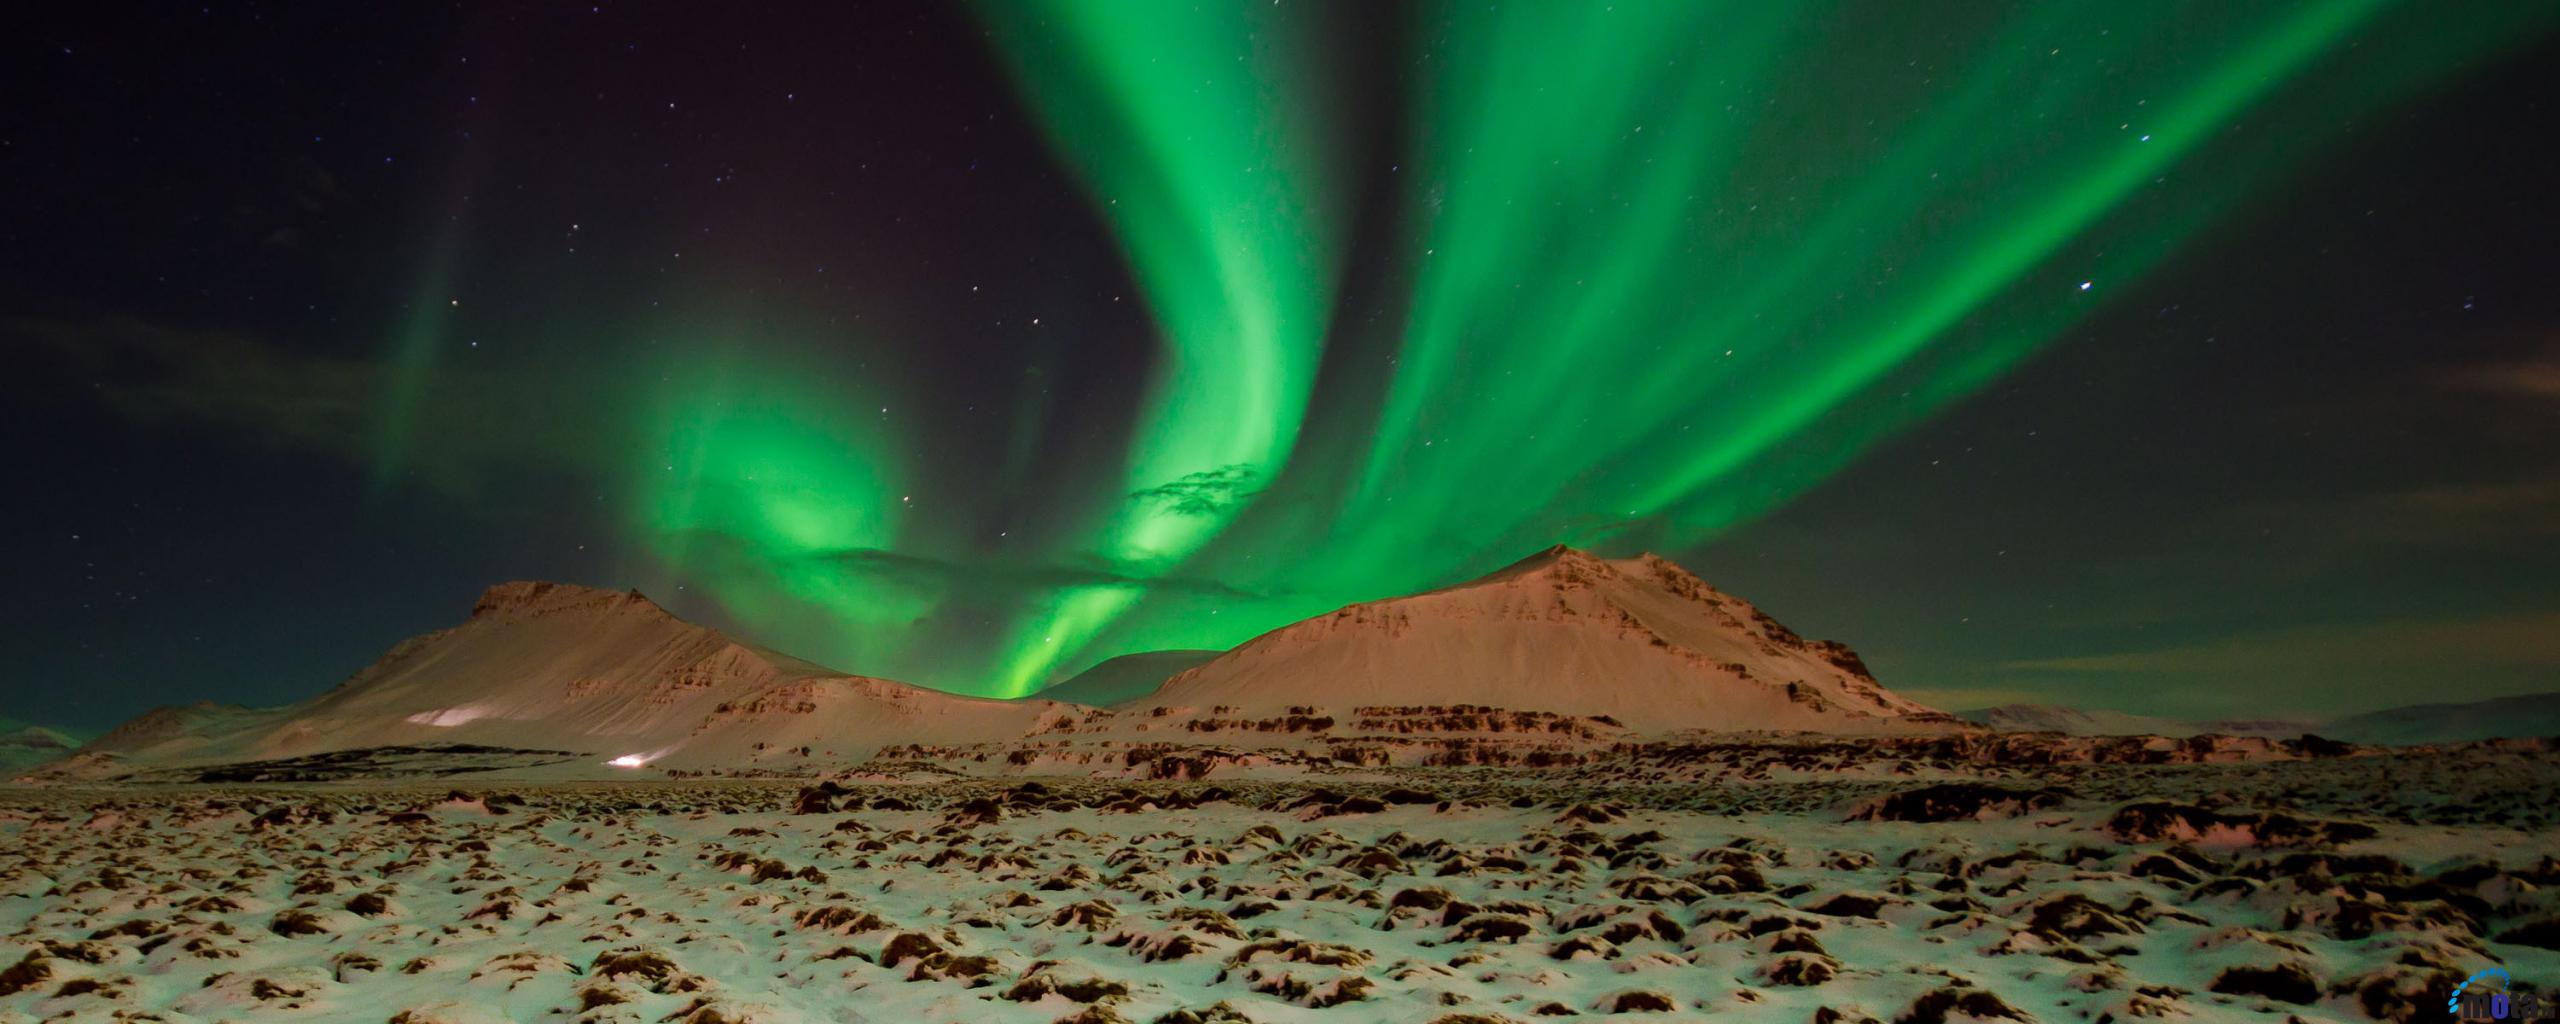 Desktop Wallpaper Northern Lights In Iceland